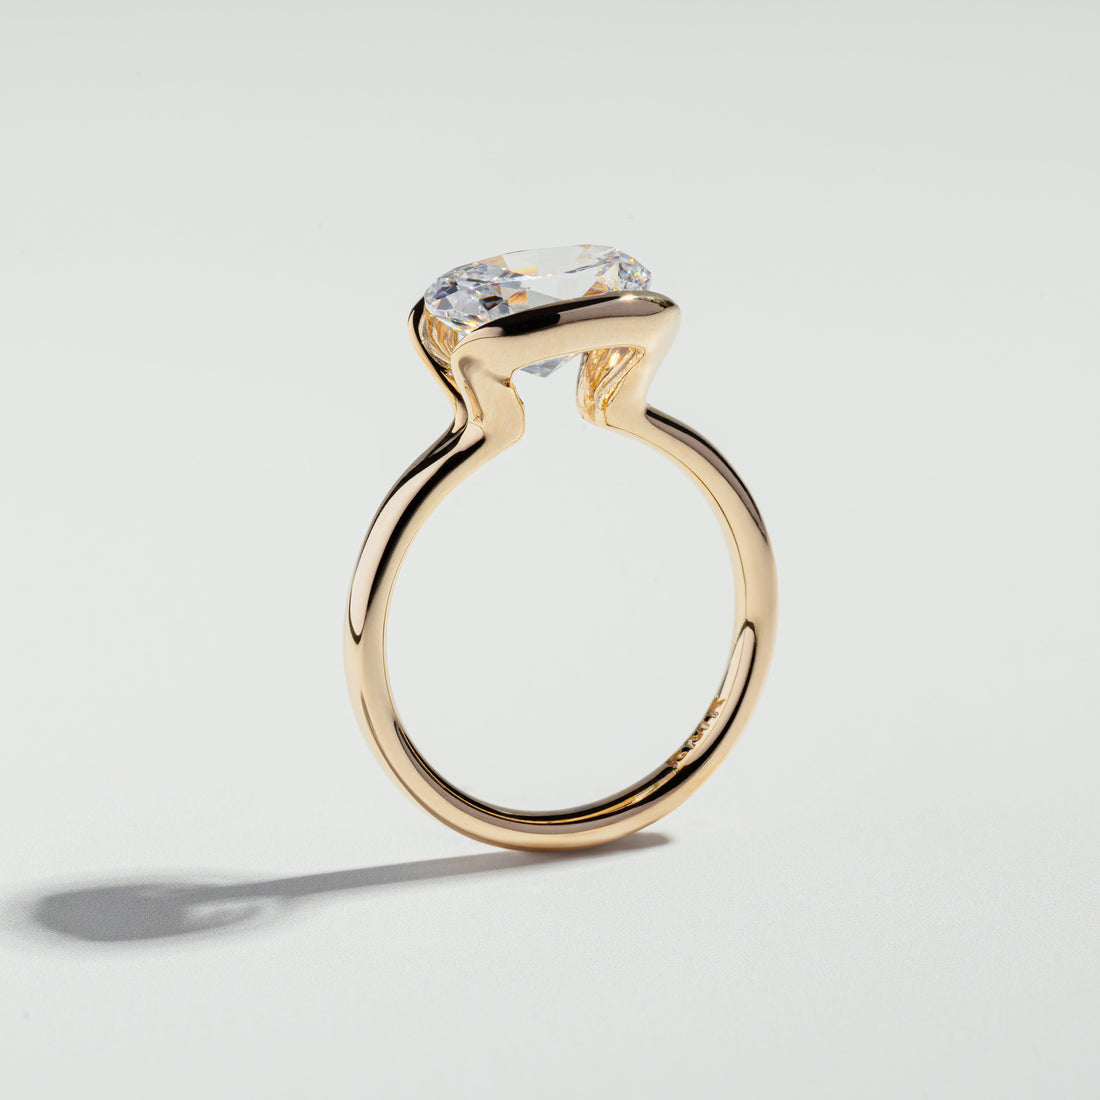 The Oval Cut Half Bezel Diamond Ring